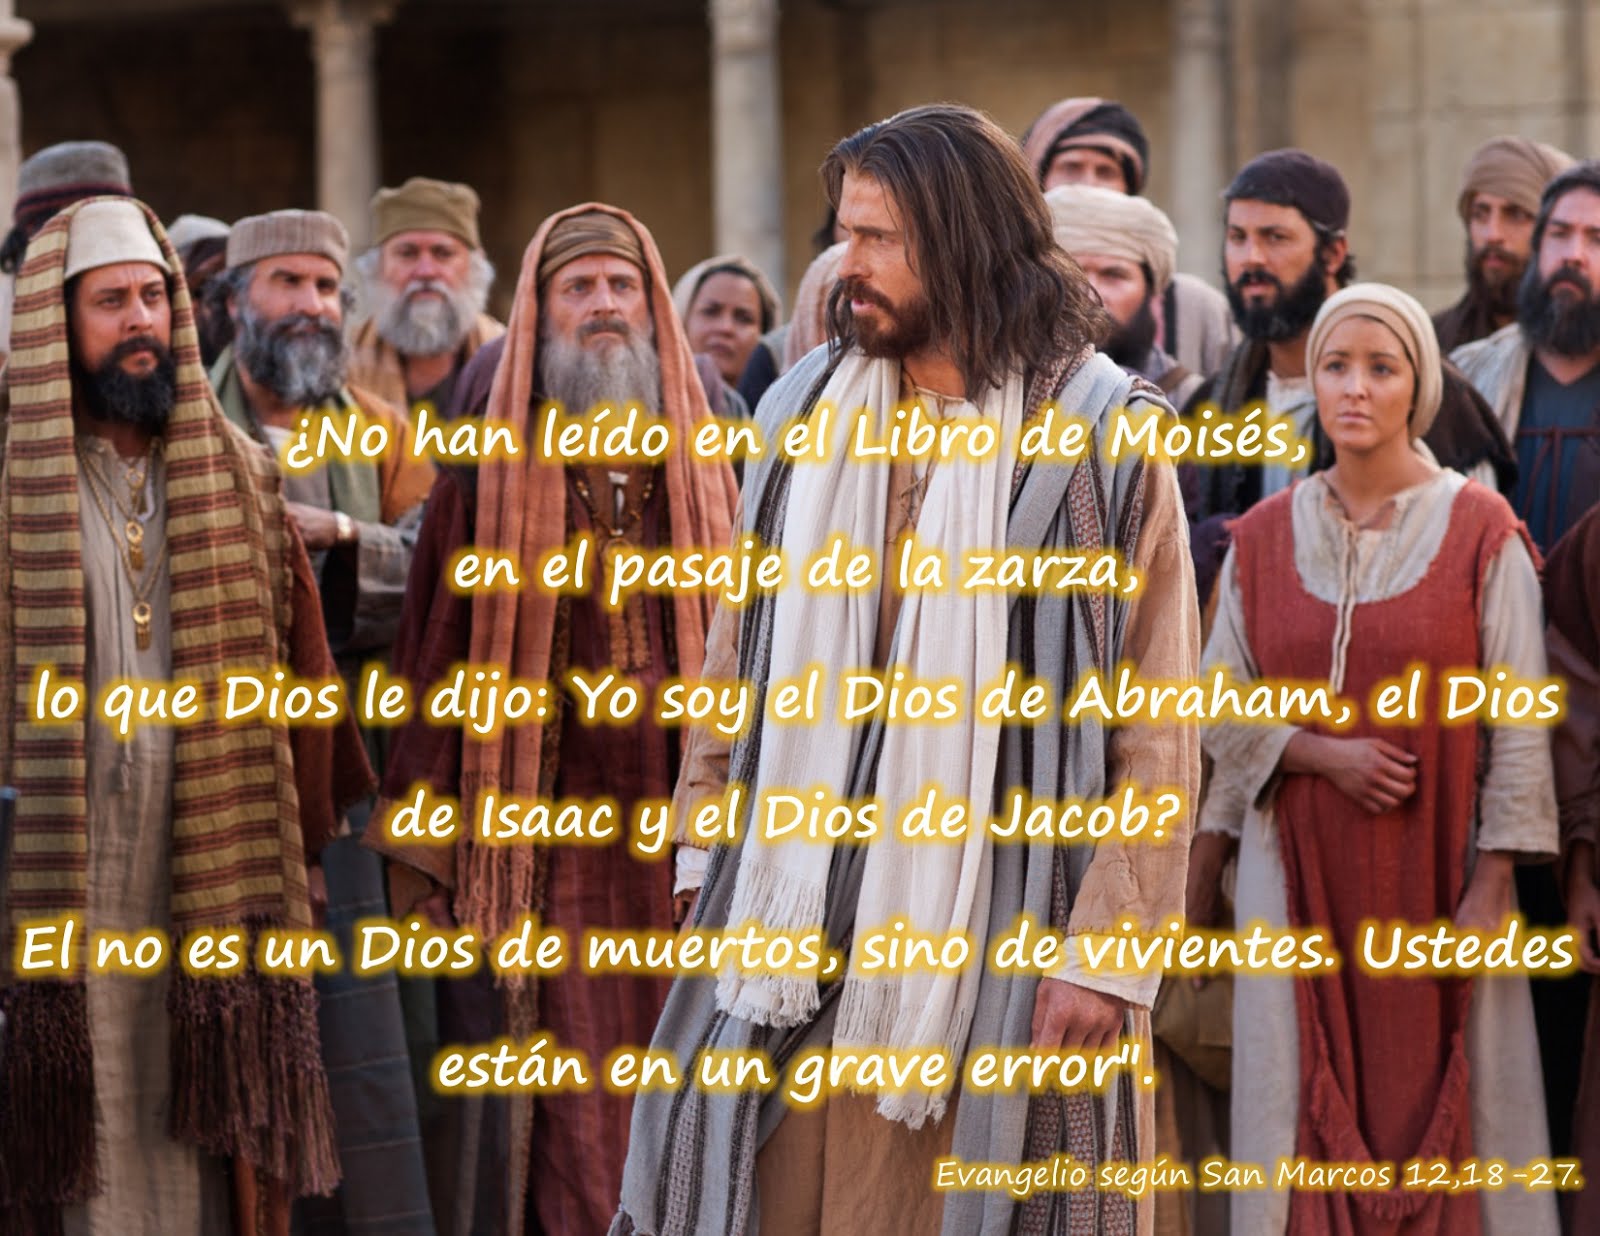 Evangelio según San Marcos 12,18-27.